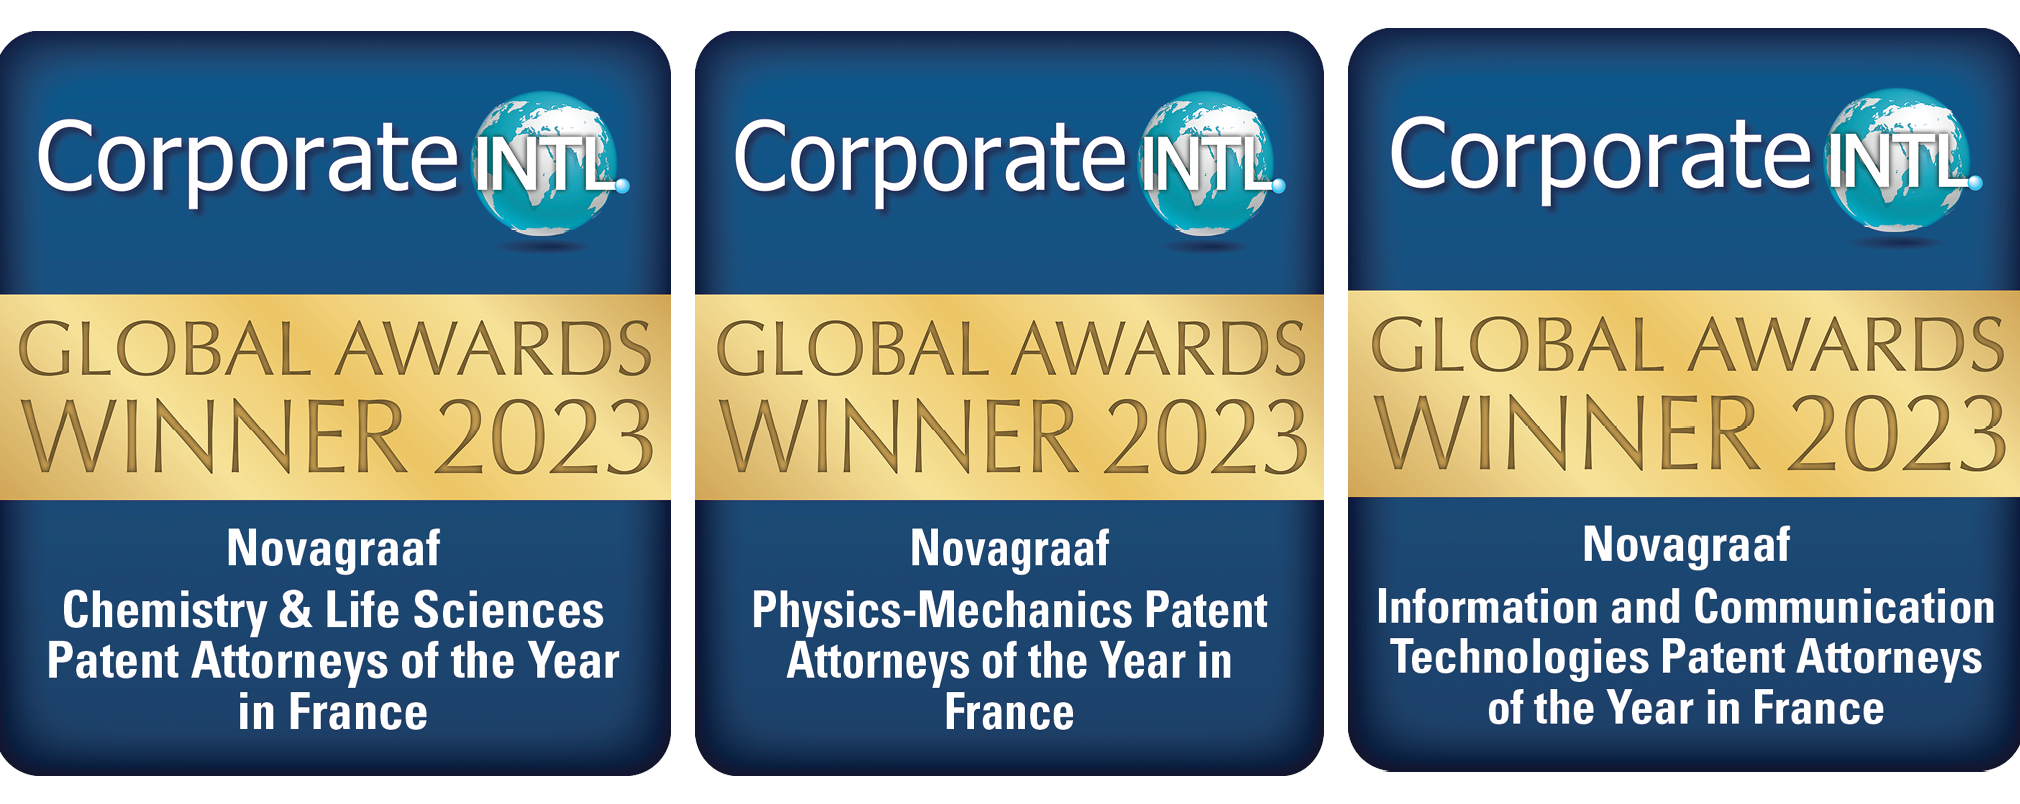 Corporate INTL Globan Awards Winner 2023 France Best Patent Attorneys